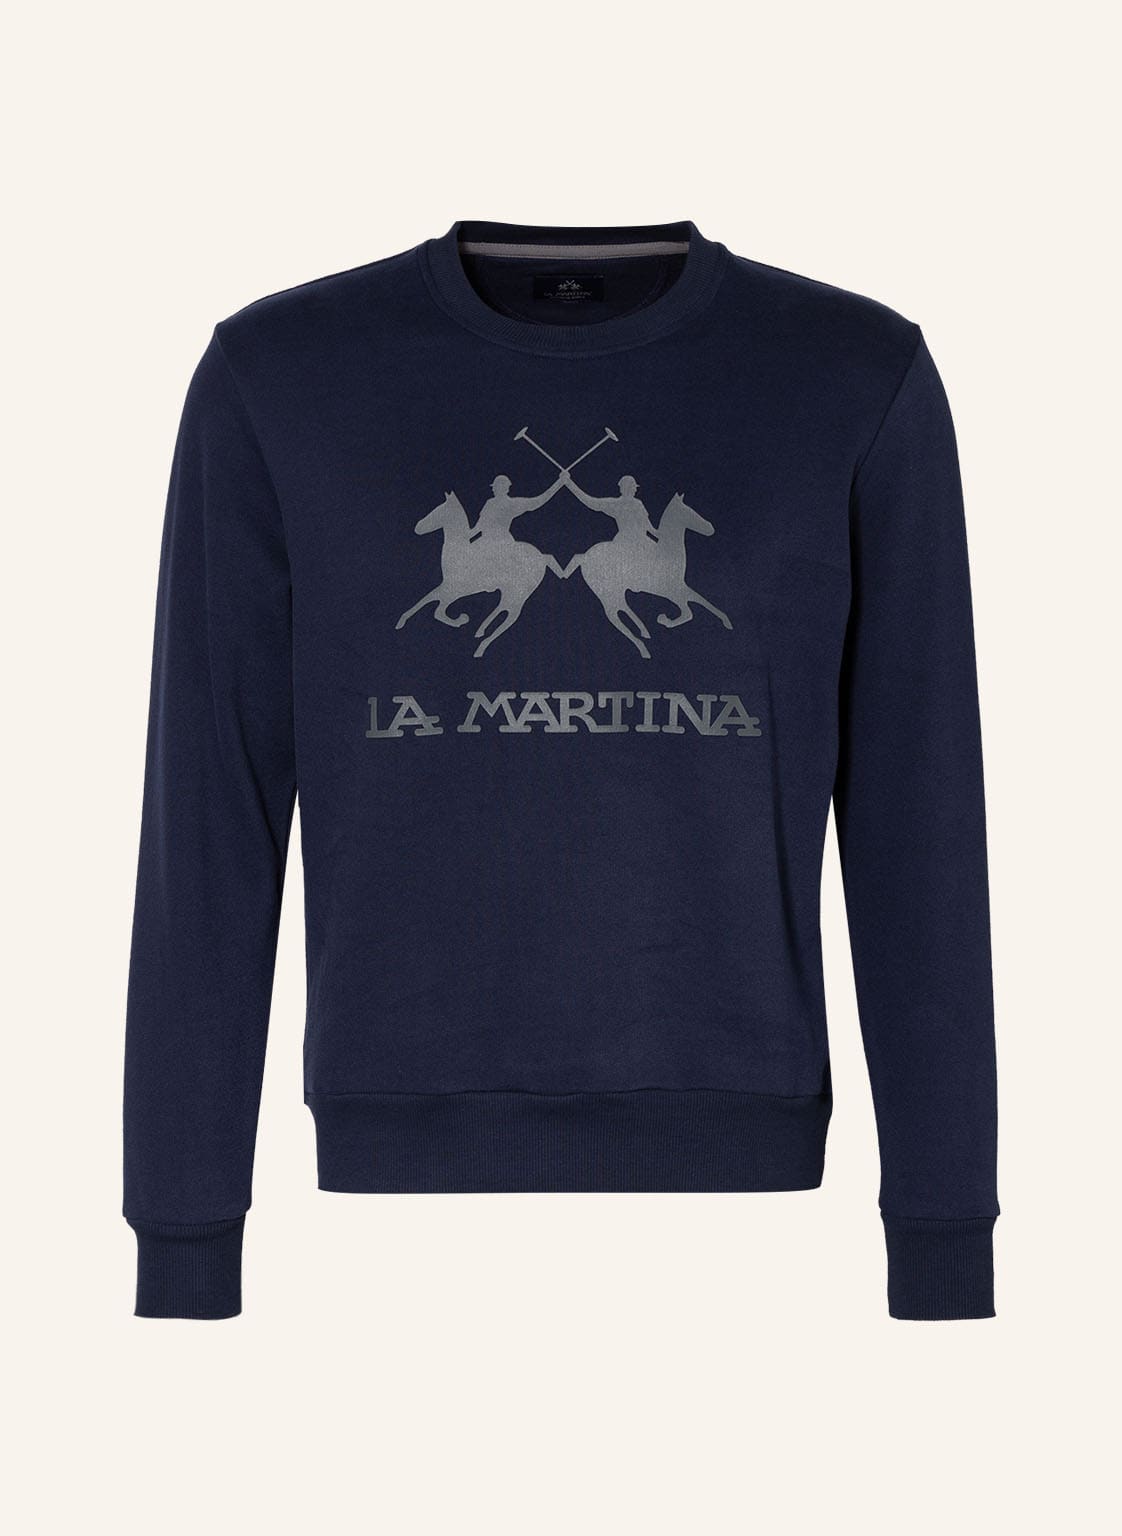 La Martina Sweatshirt blau von LA MARTINA